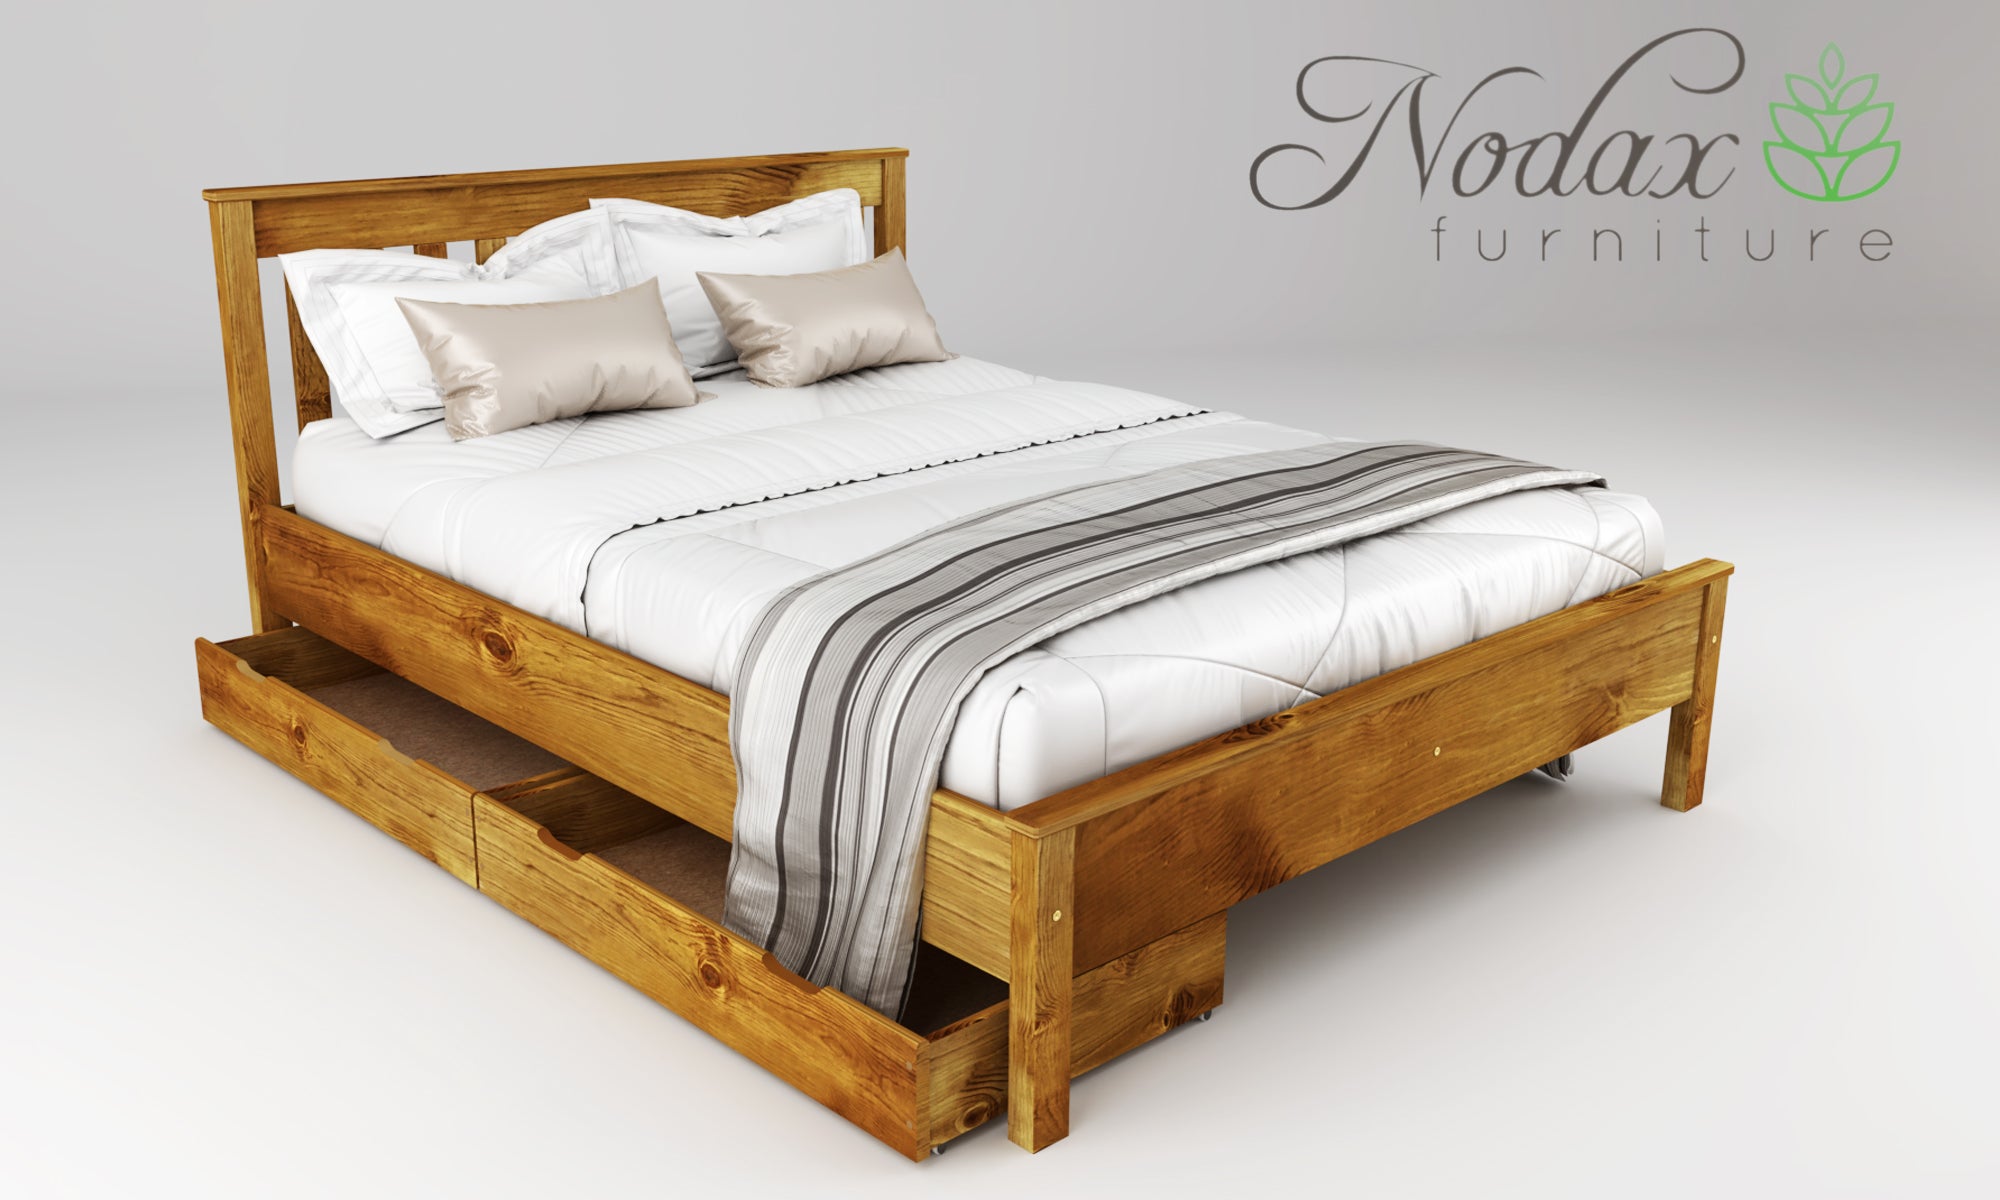 Oak-wooden-bed-frame-Furniture-capella